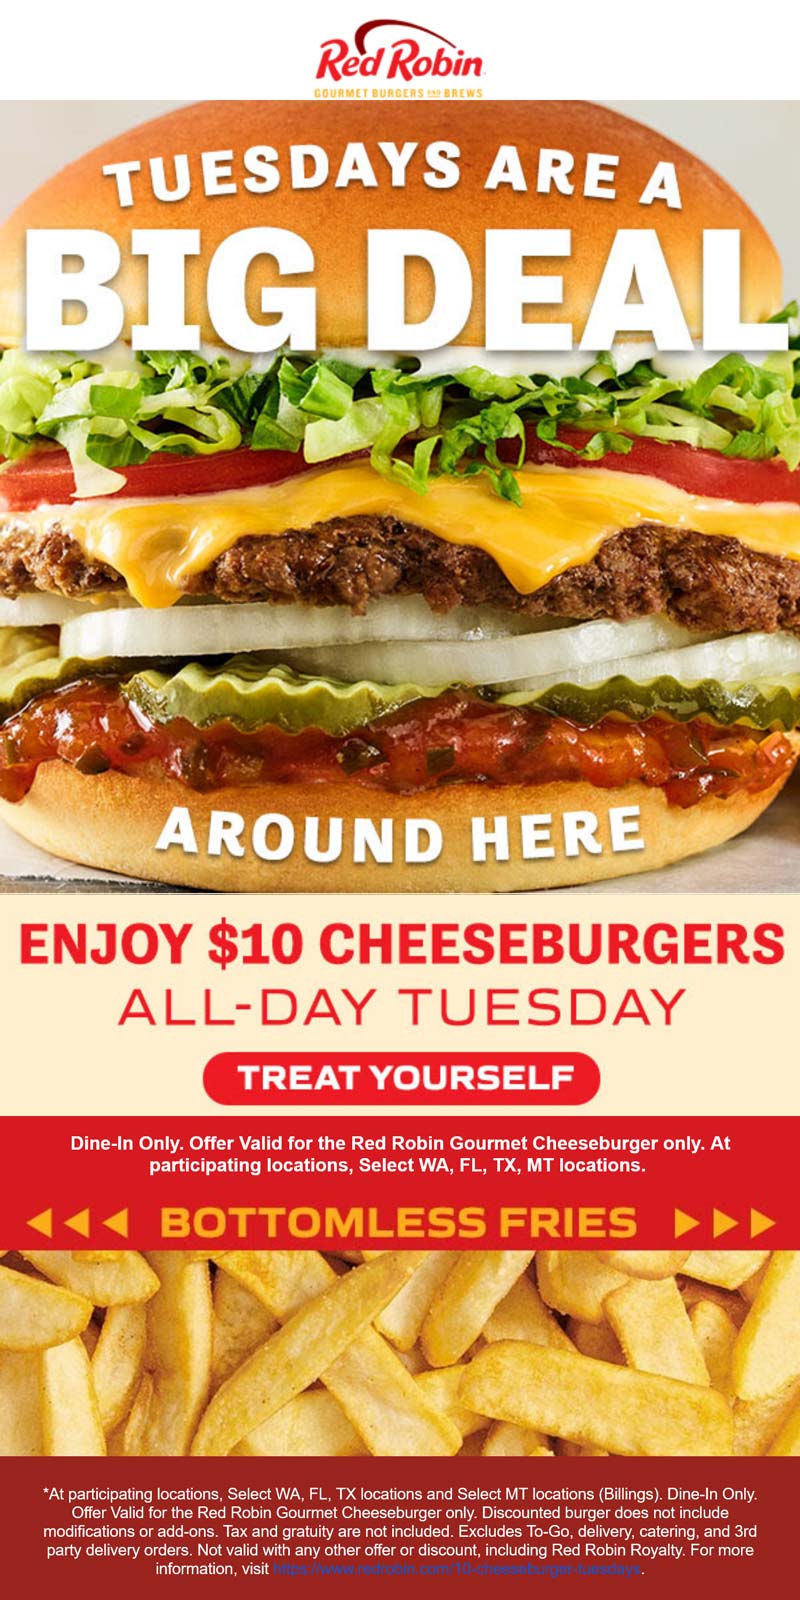 Red Robin restaurants Coupon  Cheeseburger + bottomless fries = $10 today at Red Robin #redrobin 